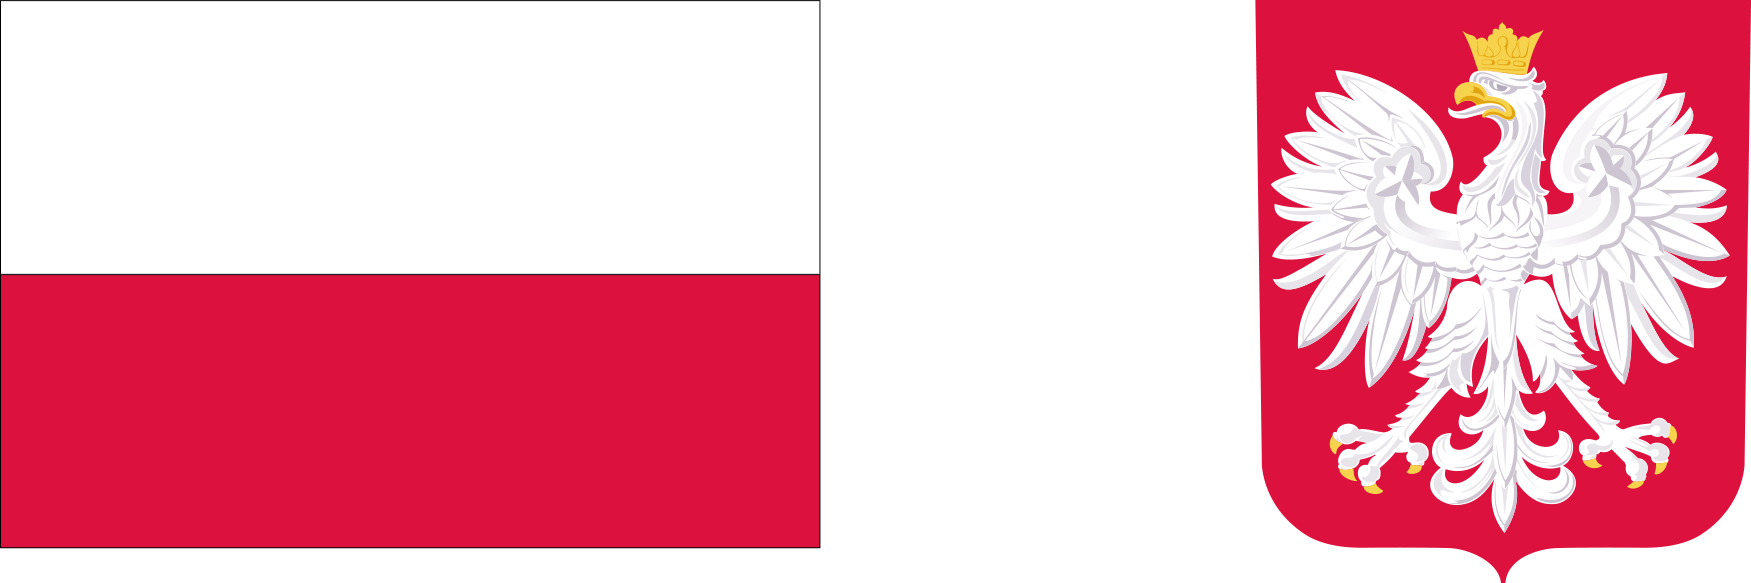 Grafika kolorowa - flaga polska i godło.